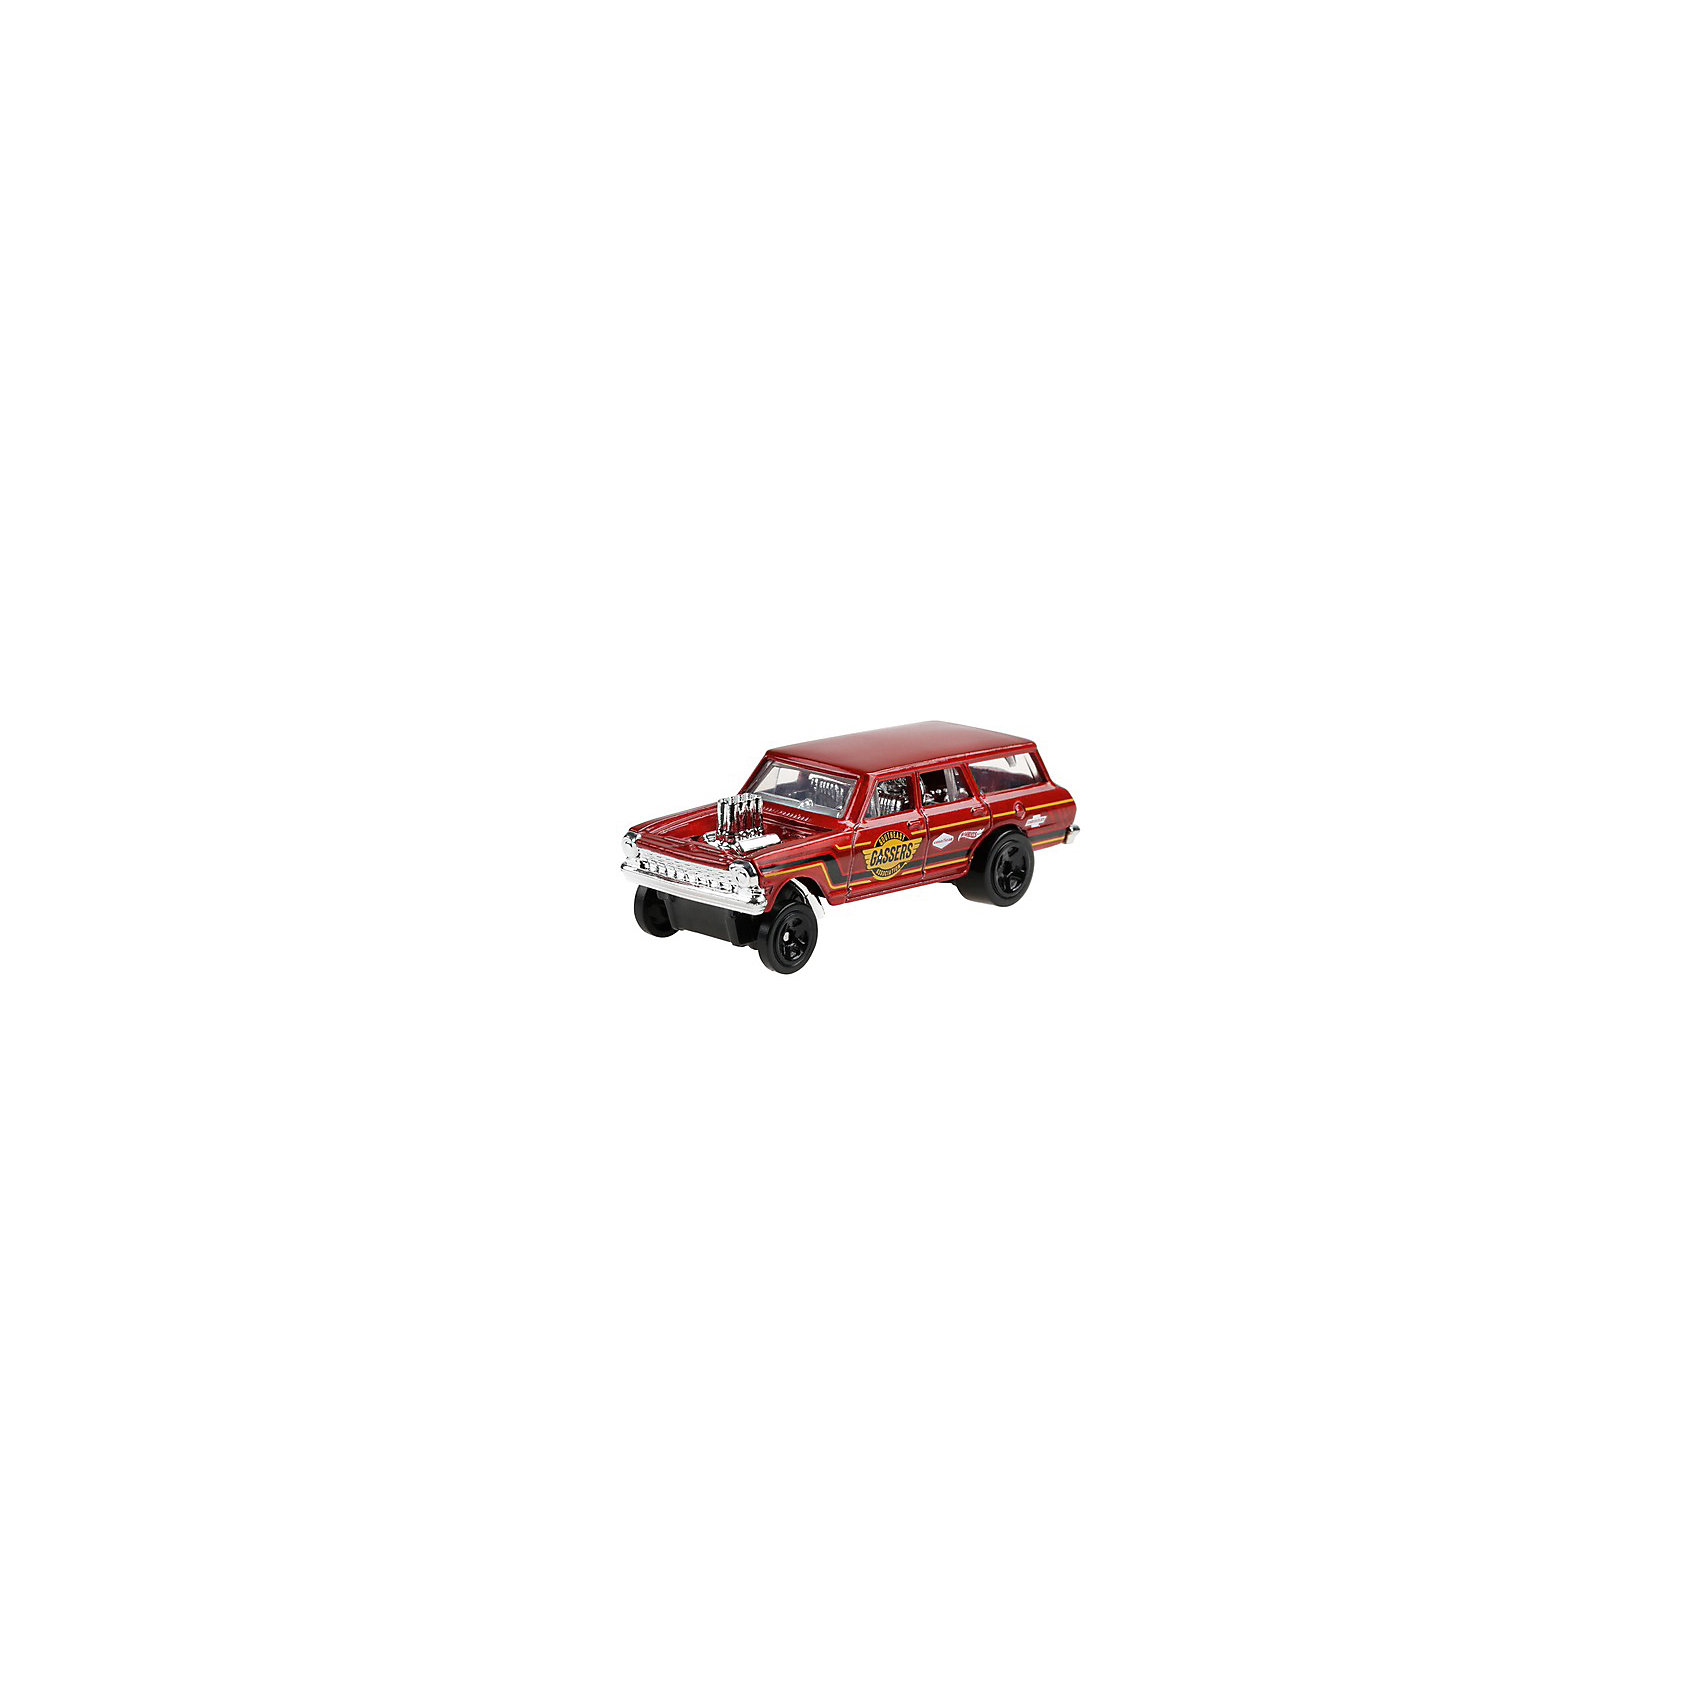 Базовая машинка Hot Wheels 64 Nova Wagon Gasser Mattel 16467102.